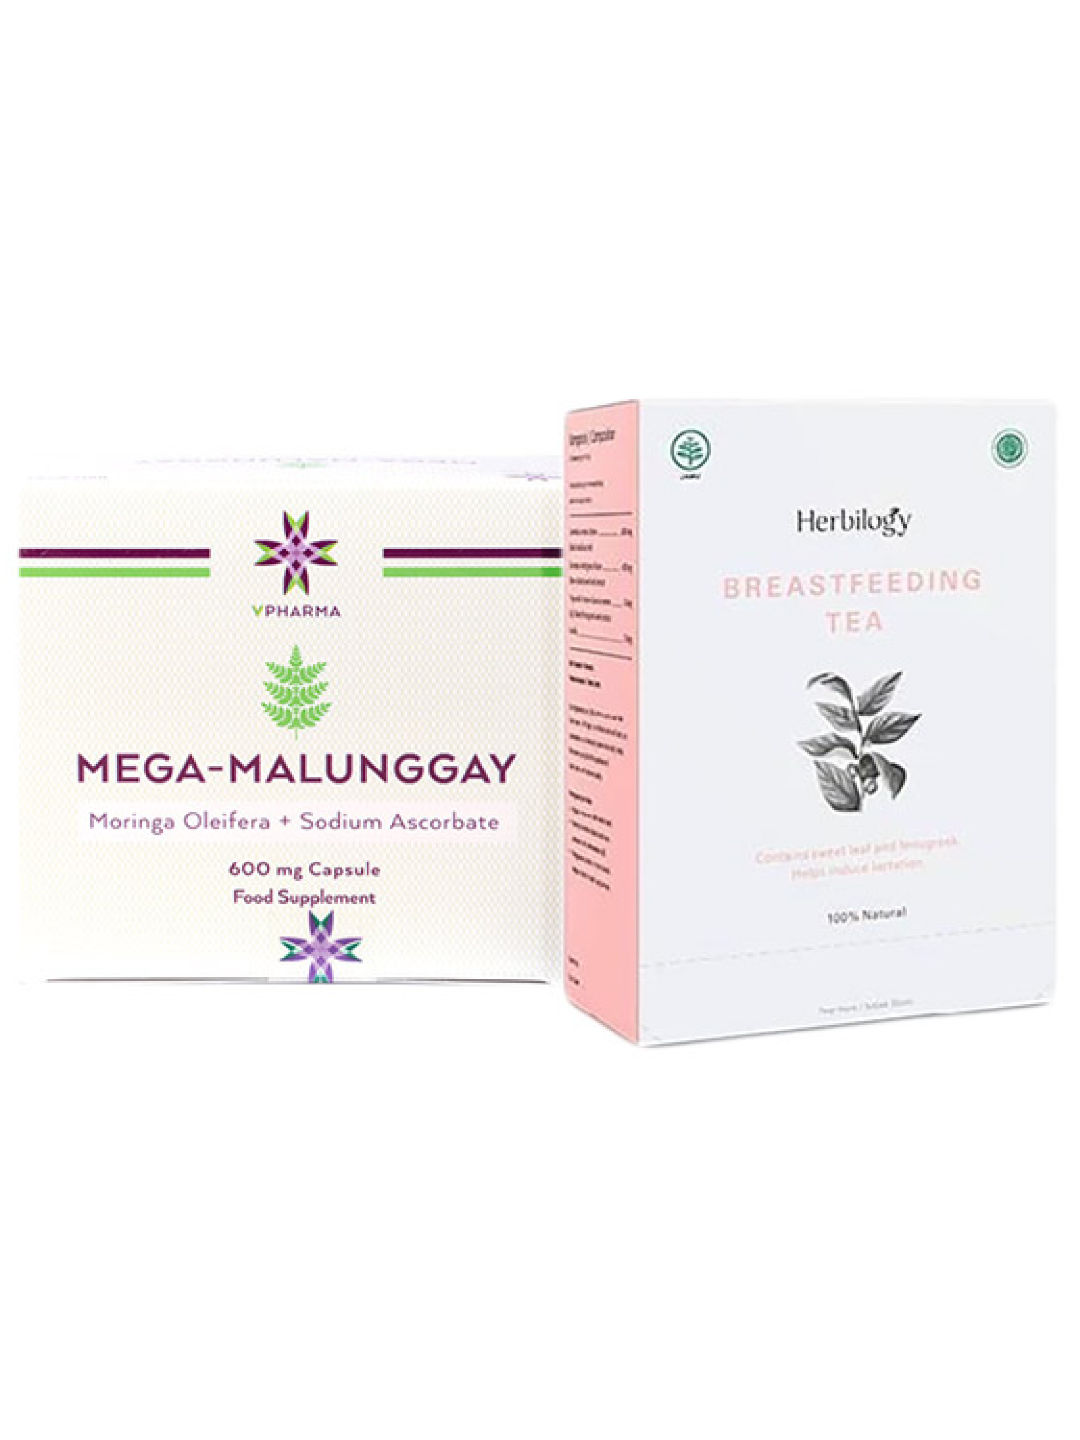 VPharma Mega-Malunggay 100's + Herbilogy Breastfeeding Tea Bundle